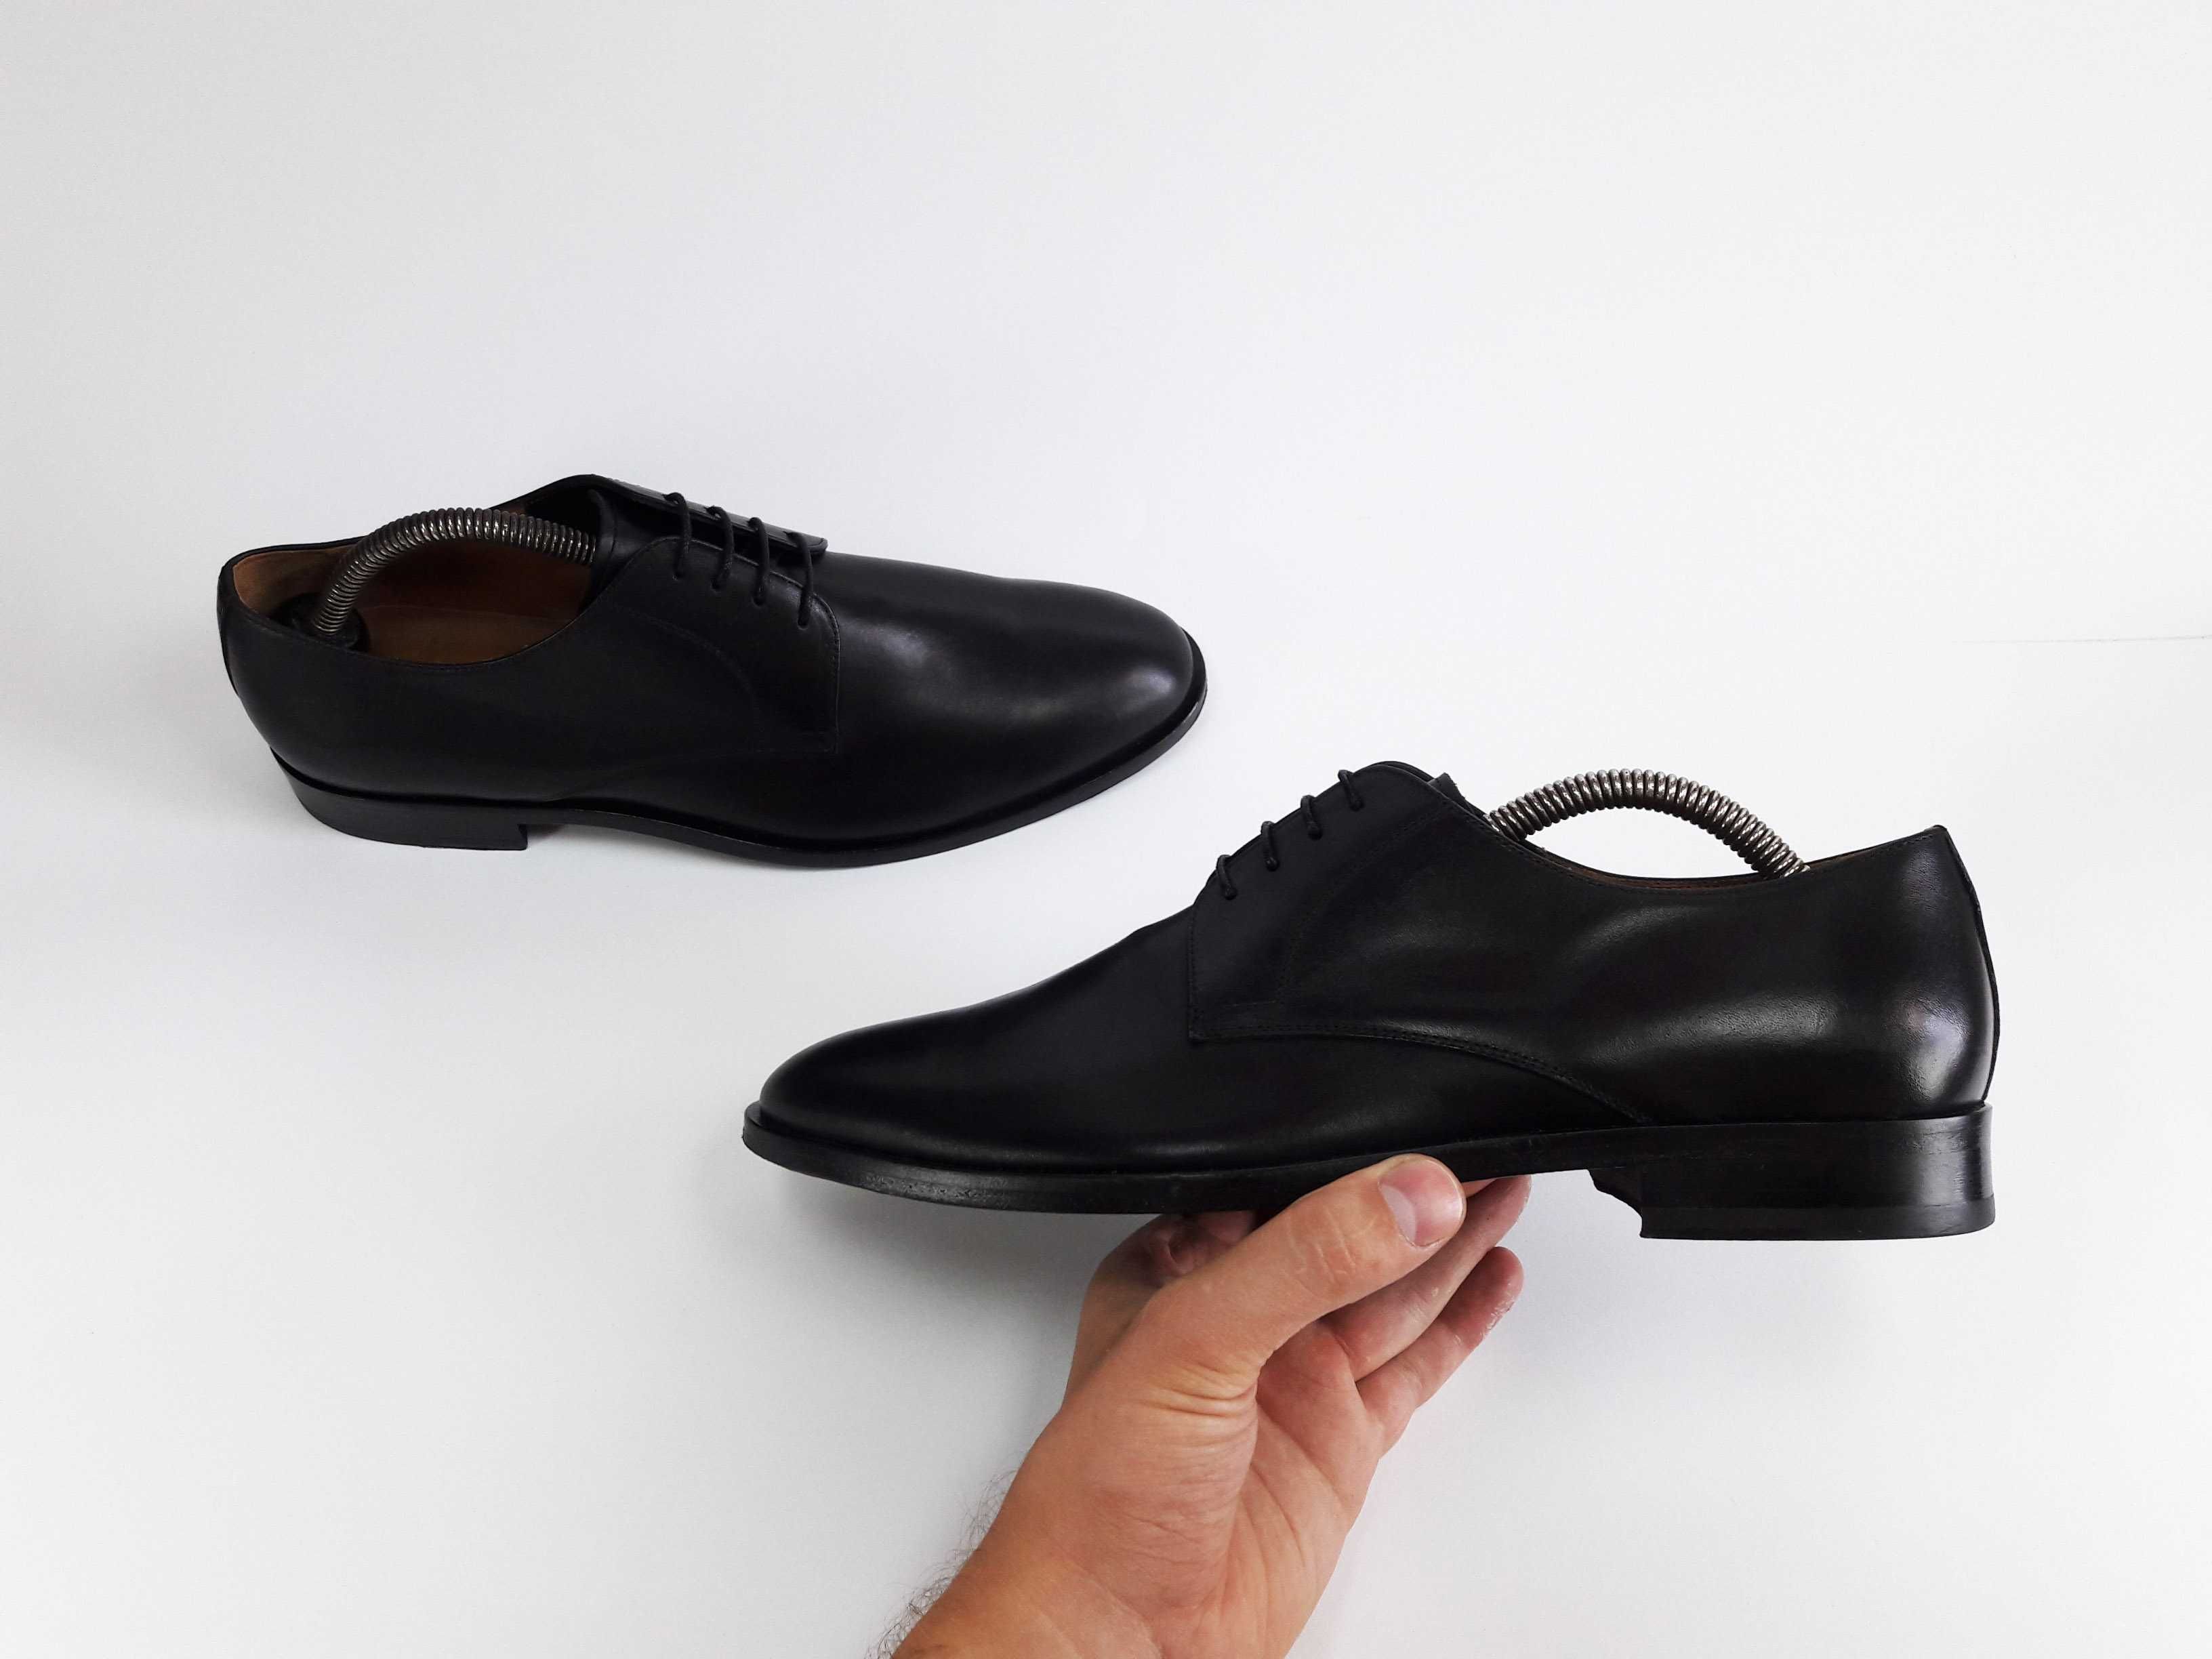 D.H.POLLAK Made in Italy чорні туфлі черные туфли 41 42 26.5-27 см